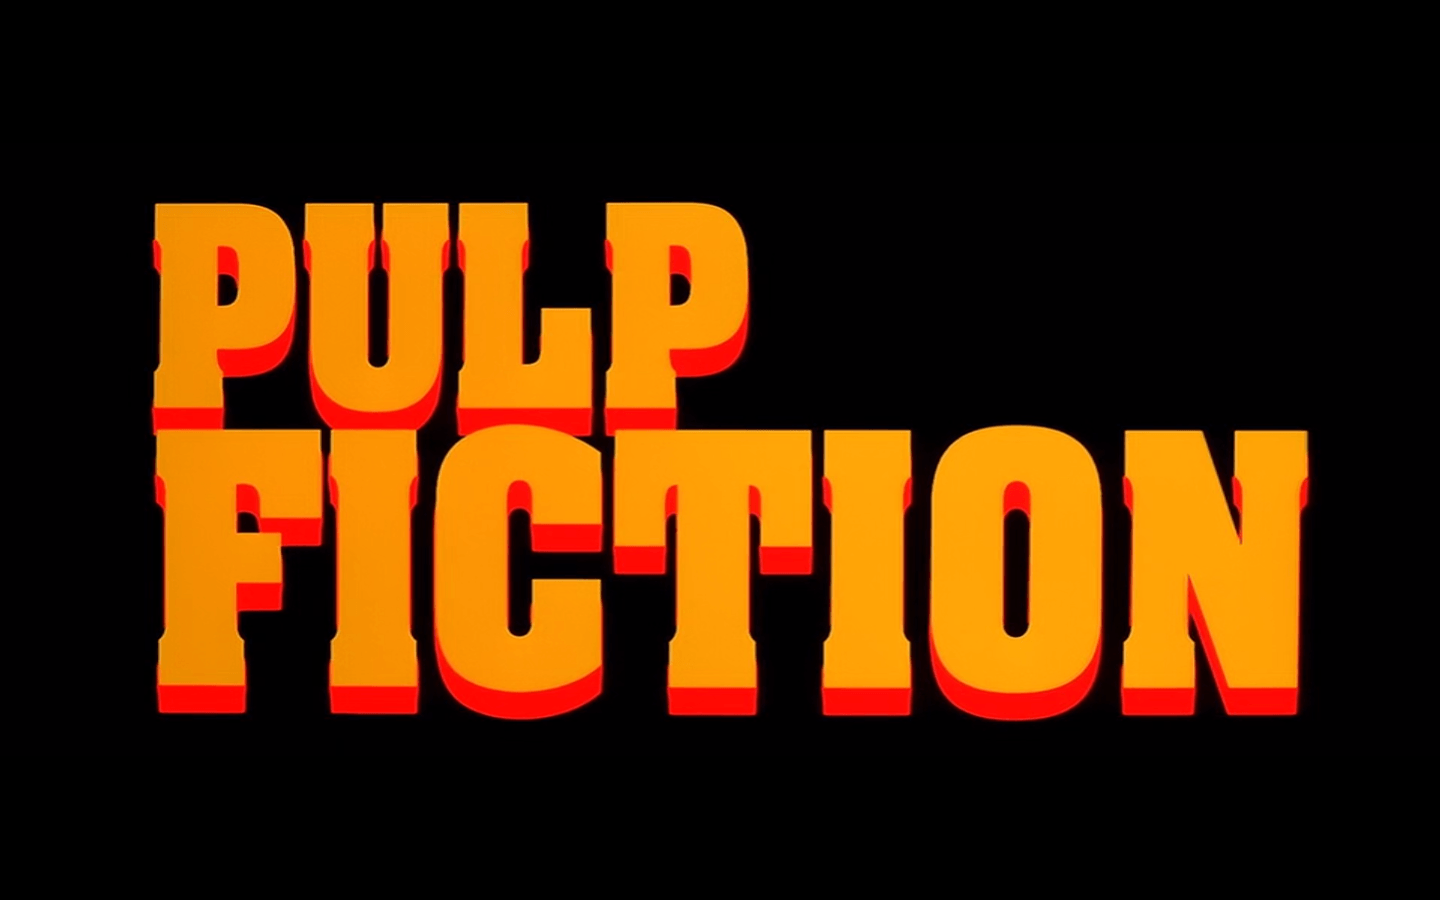 Pulp Fiction Background